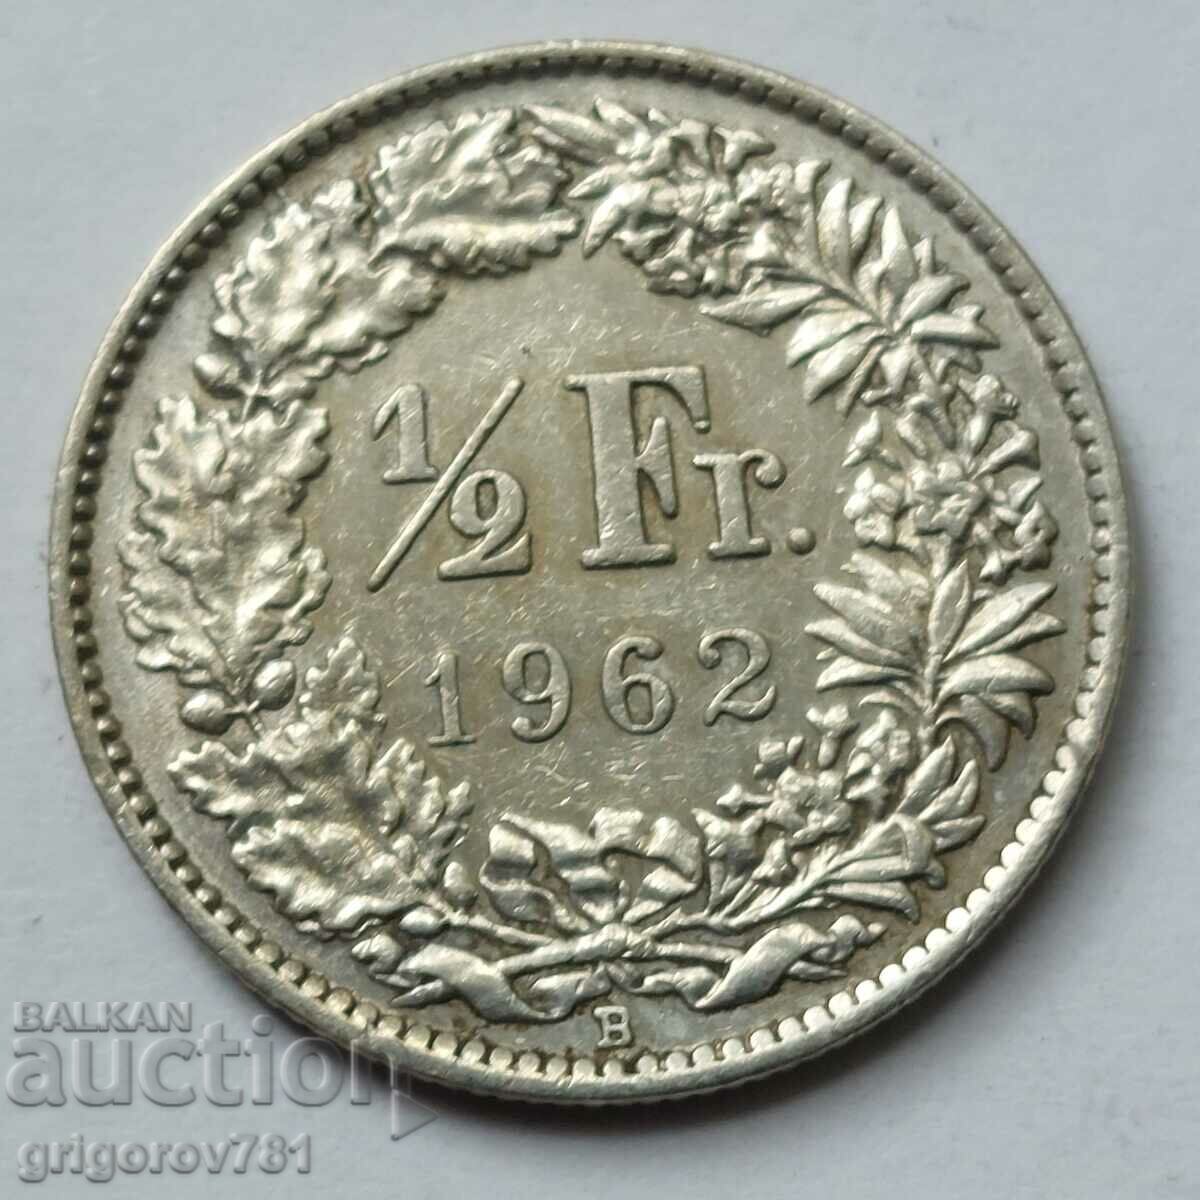 1/2 Franc Argint Elveția 1962 B - Monedă de argint #60